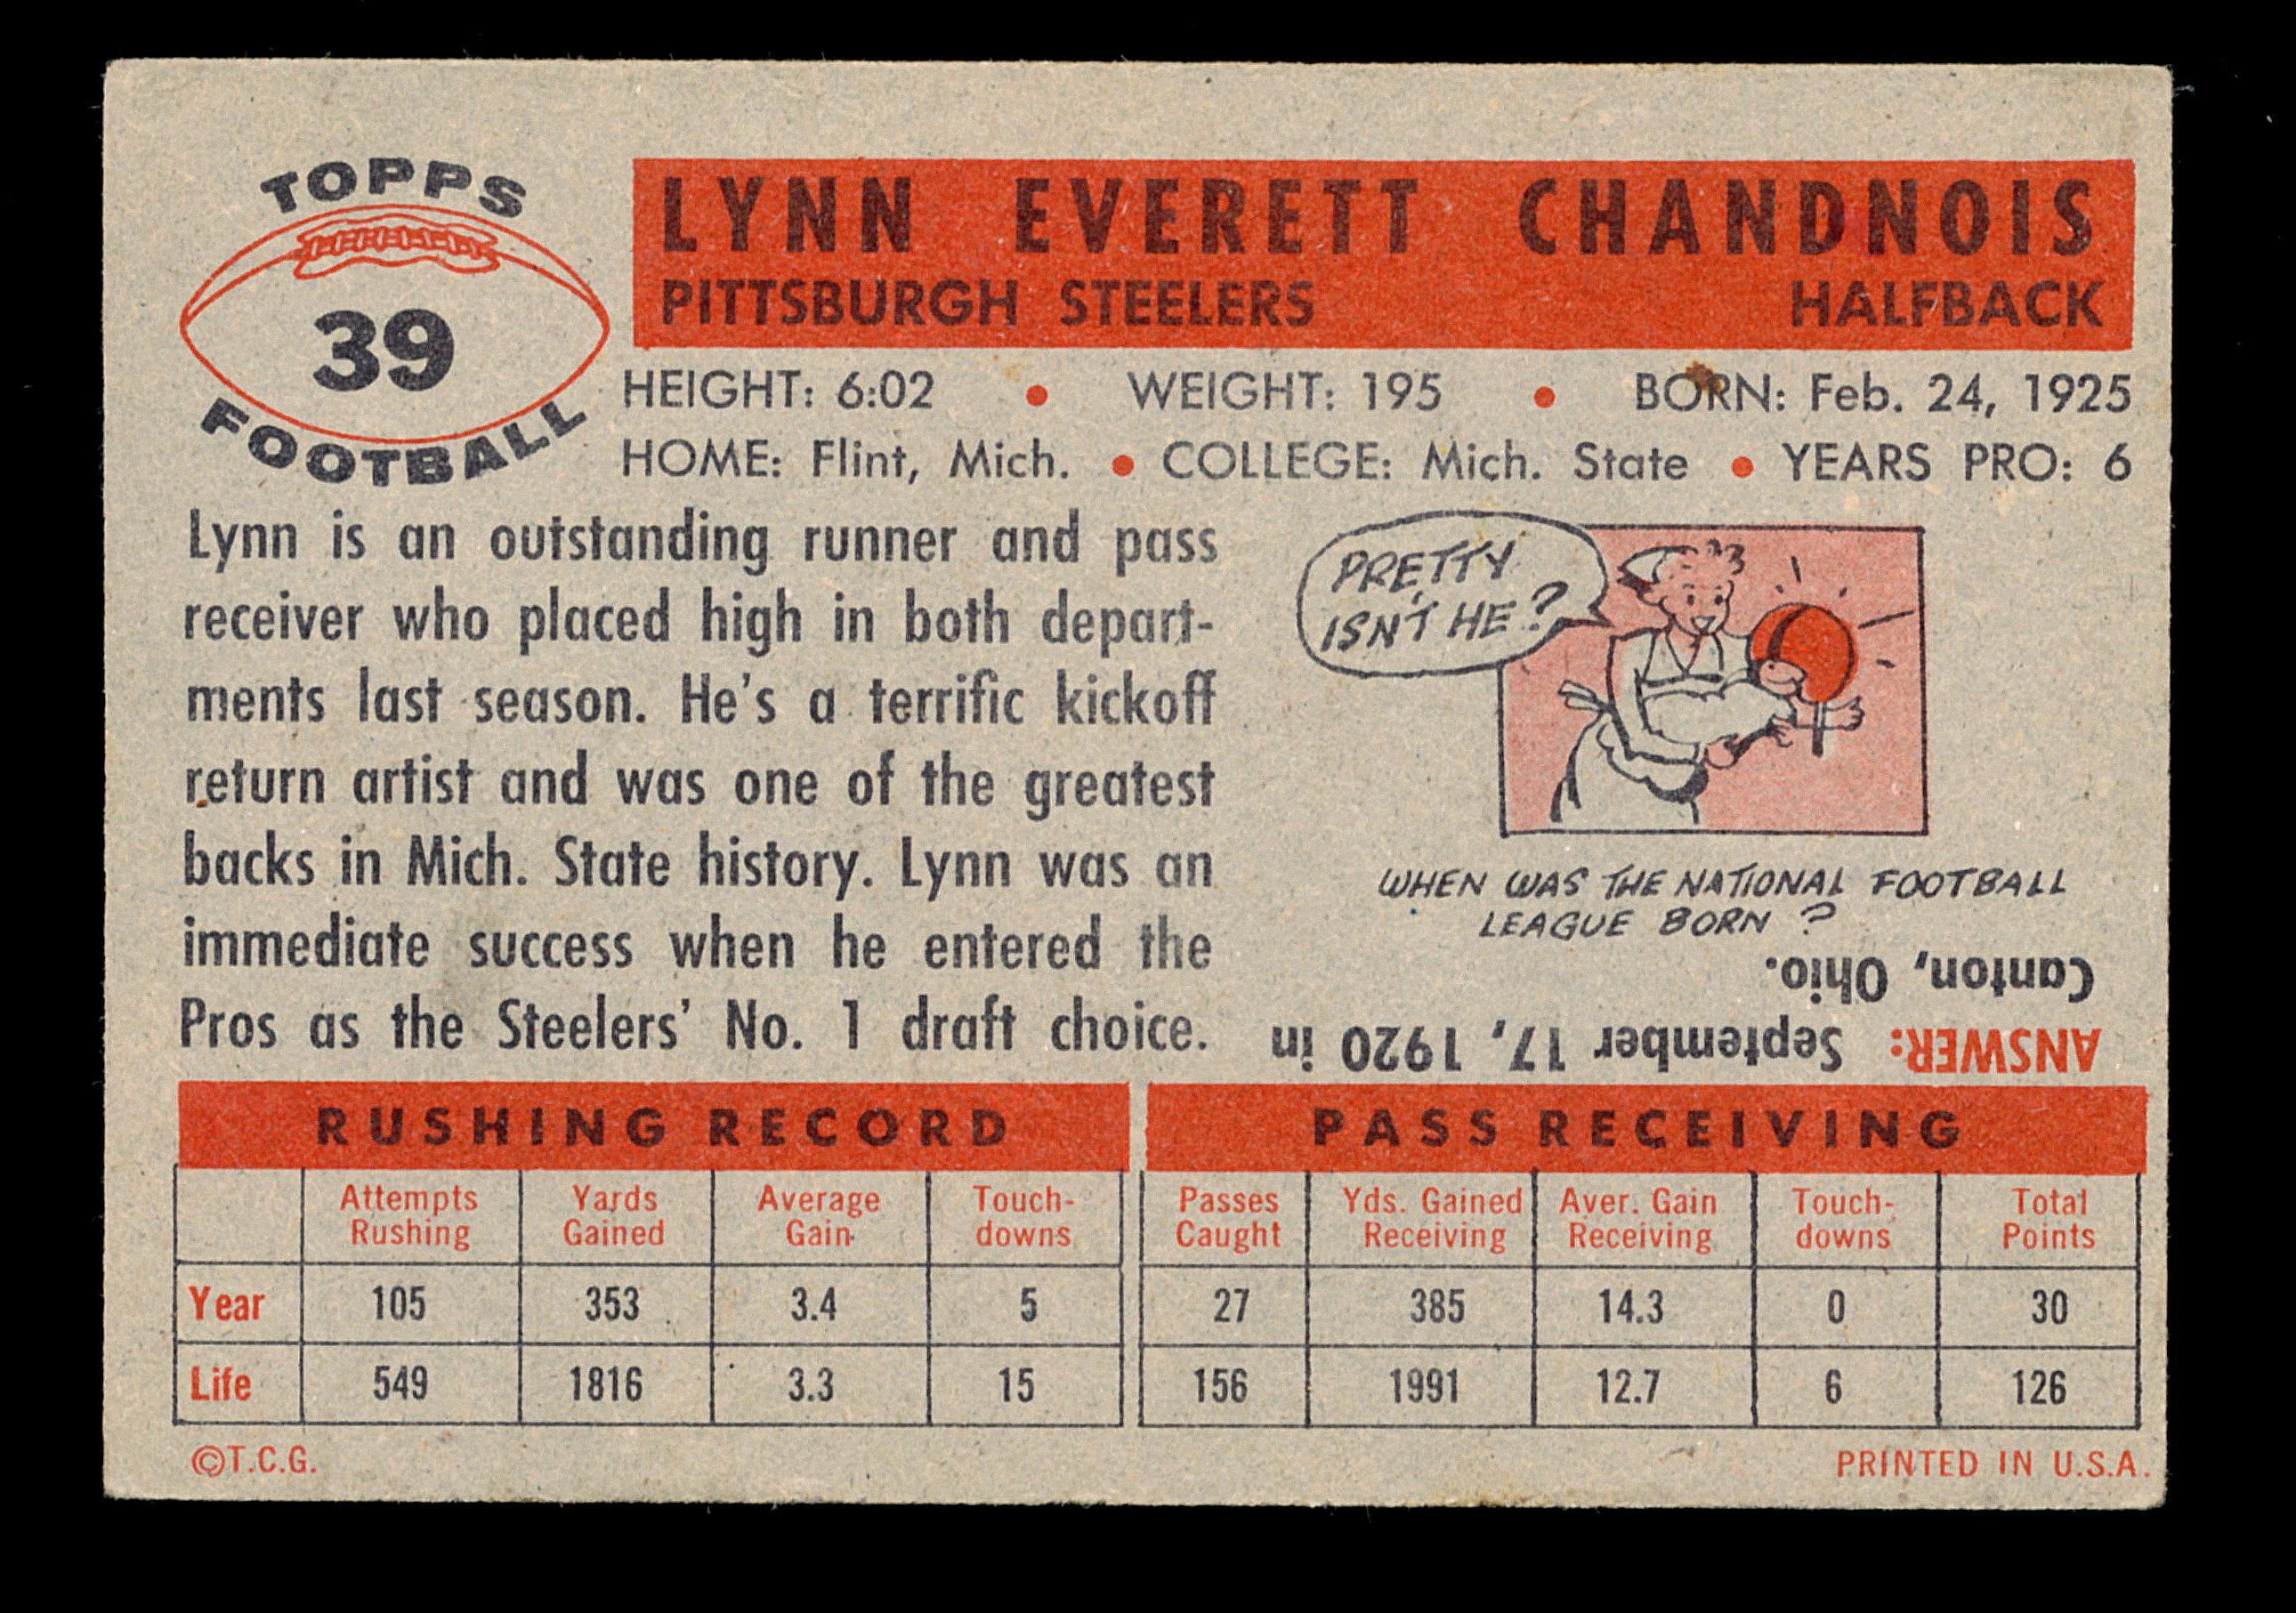 1956 Topps Football Card #39 Lynn Chandnois Pittsburgh Steelers